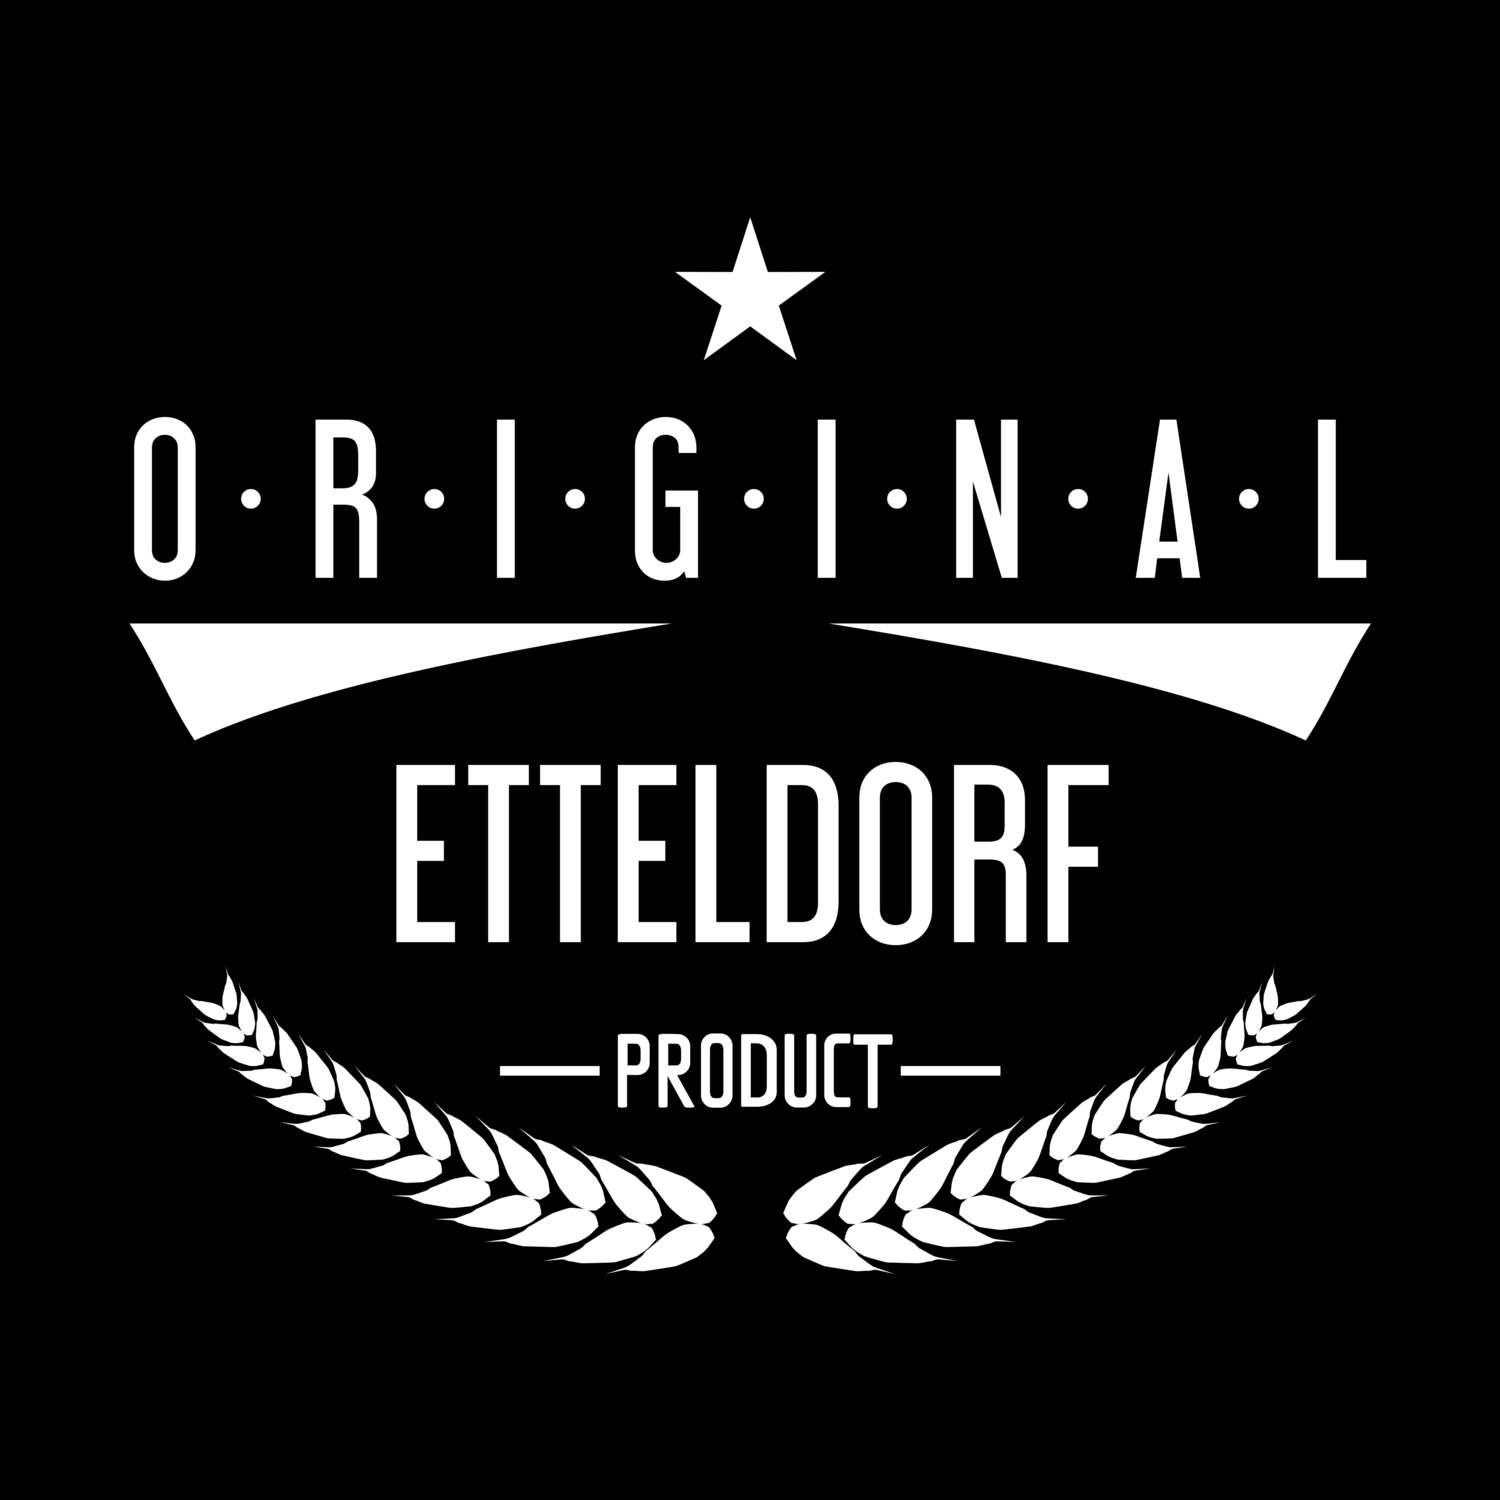 Etteldorf T-Shirt »Original Product«